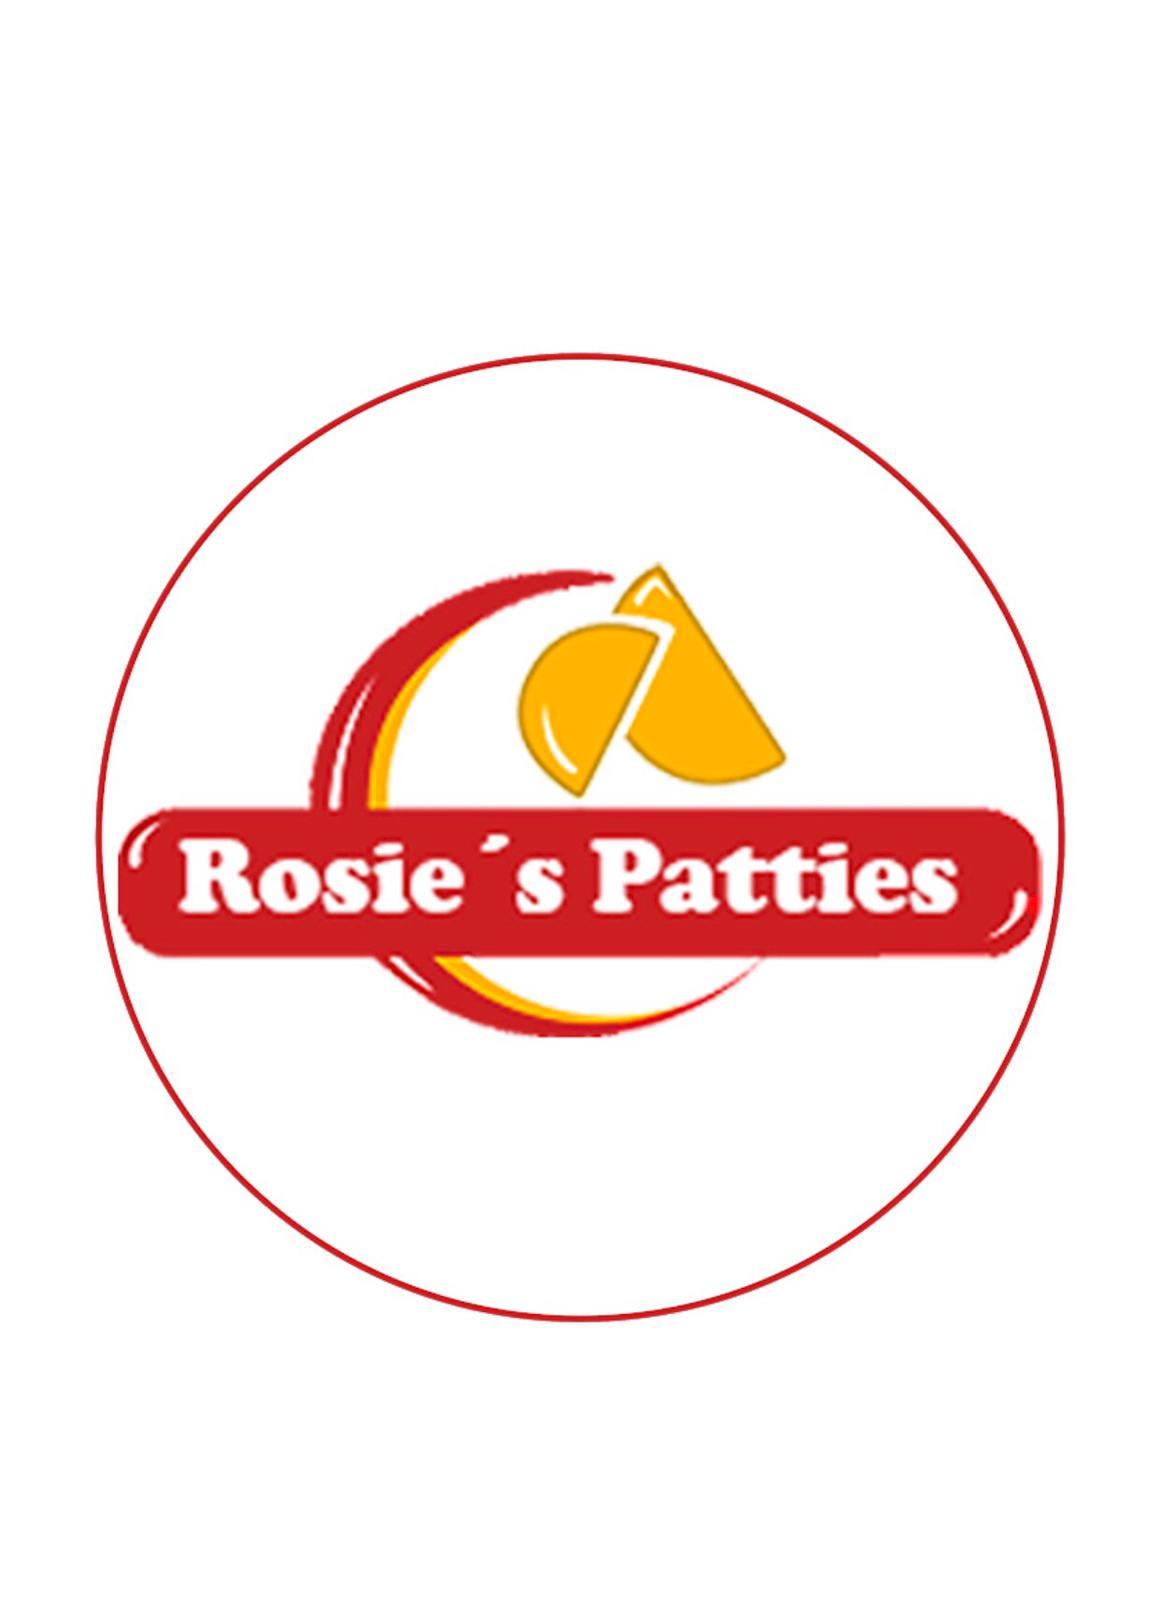 Rosie's Patties